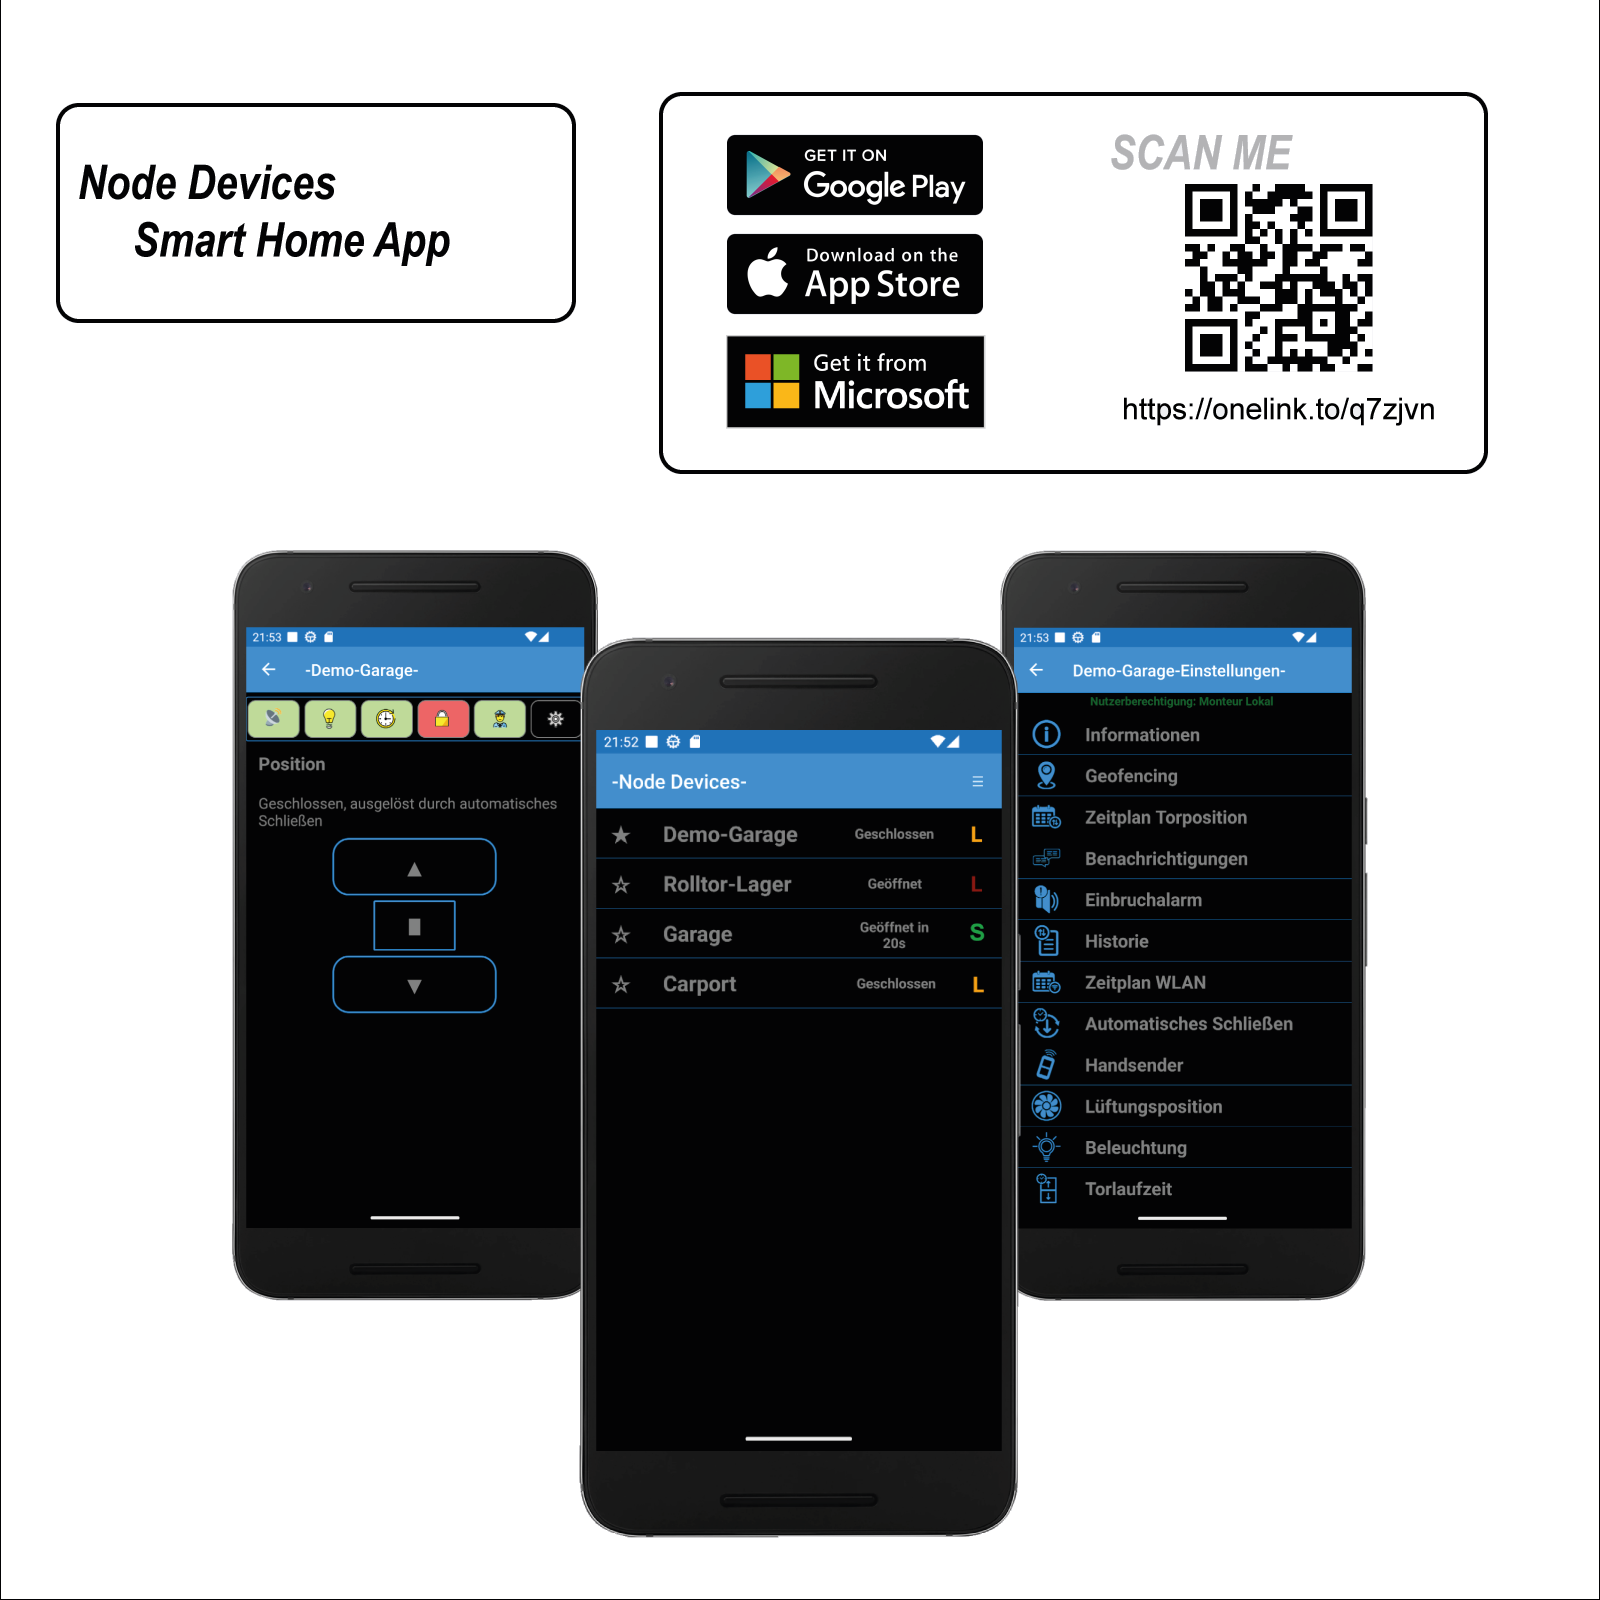 Node Devices Smart Home App